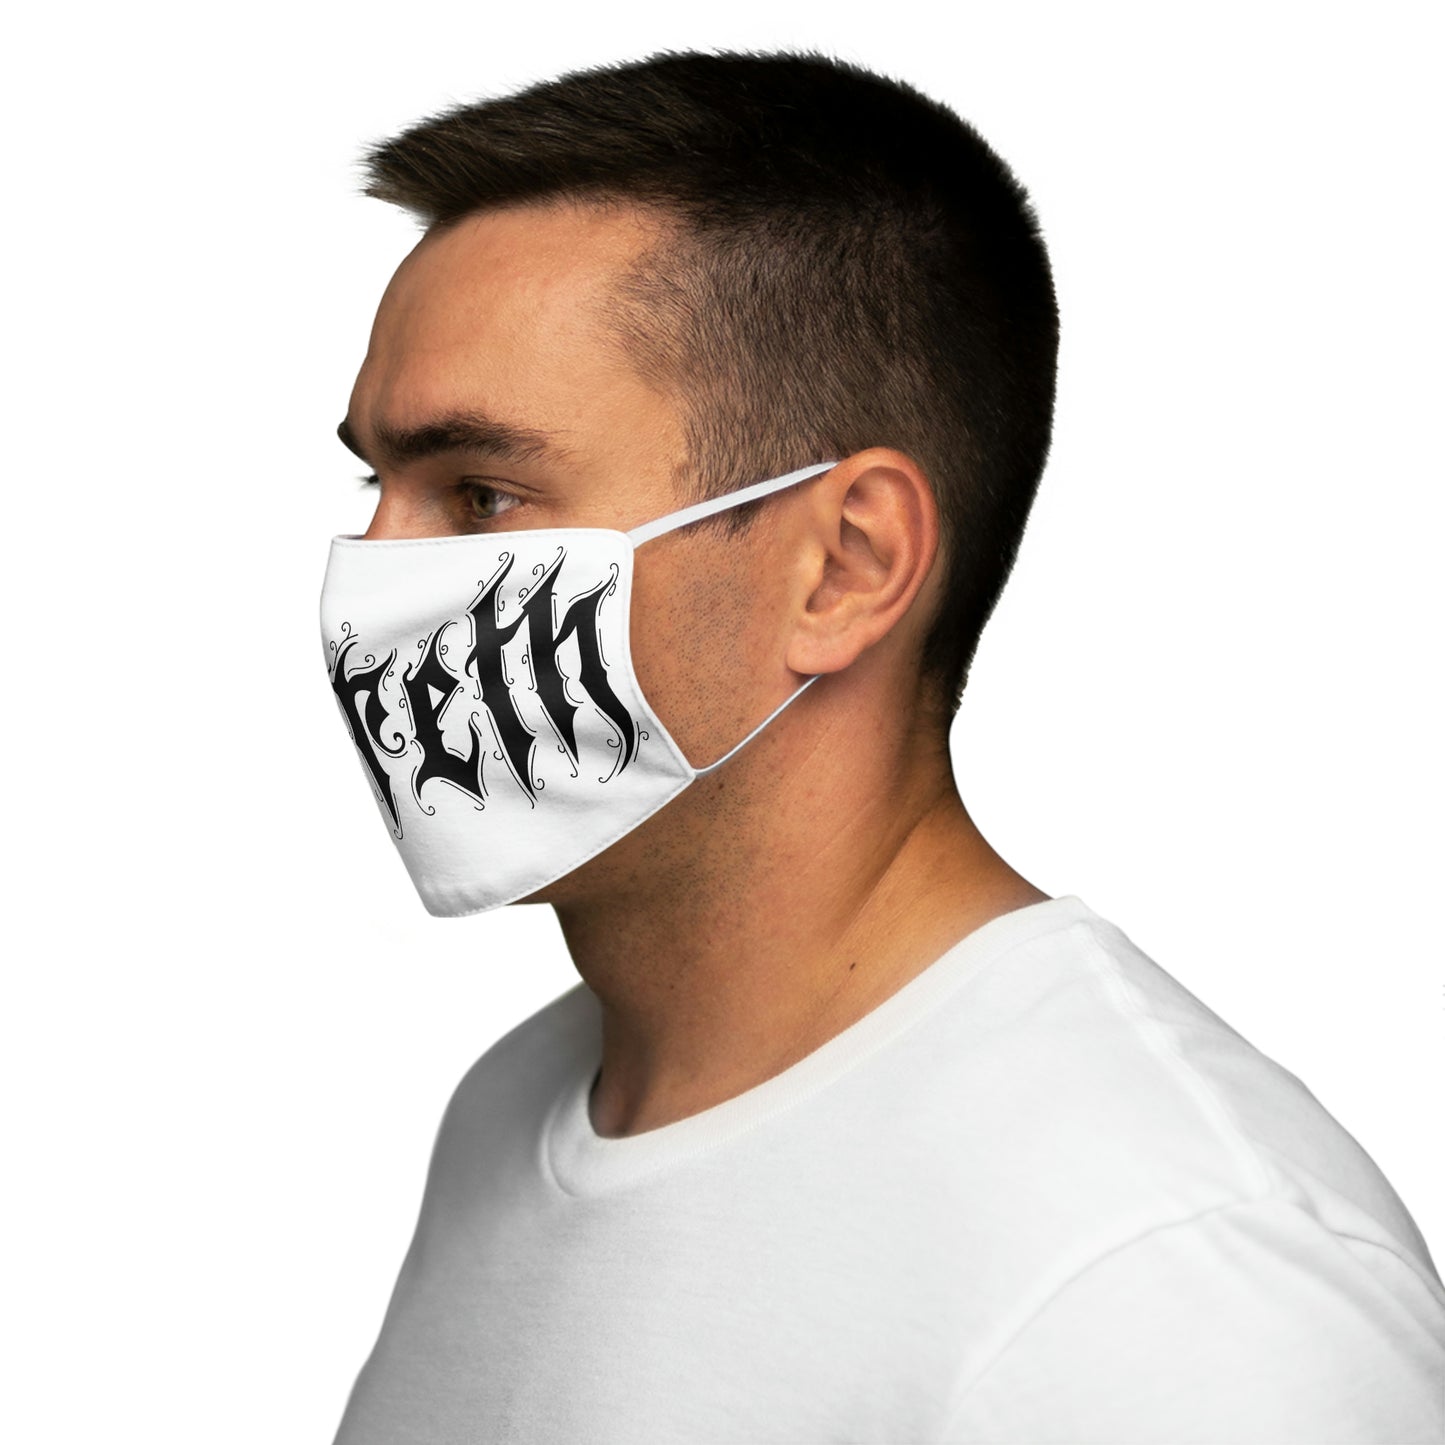 Sereth - Logo Face Mask